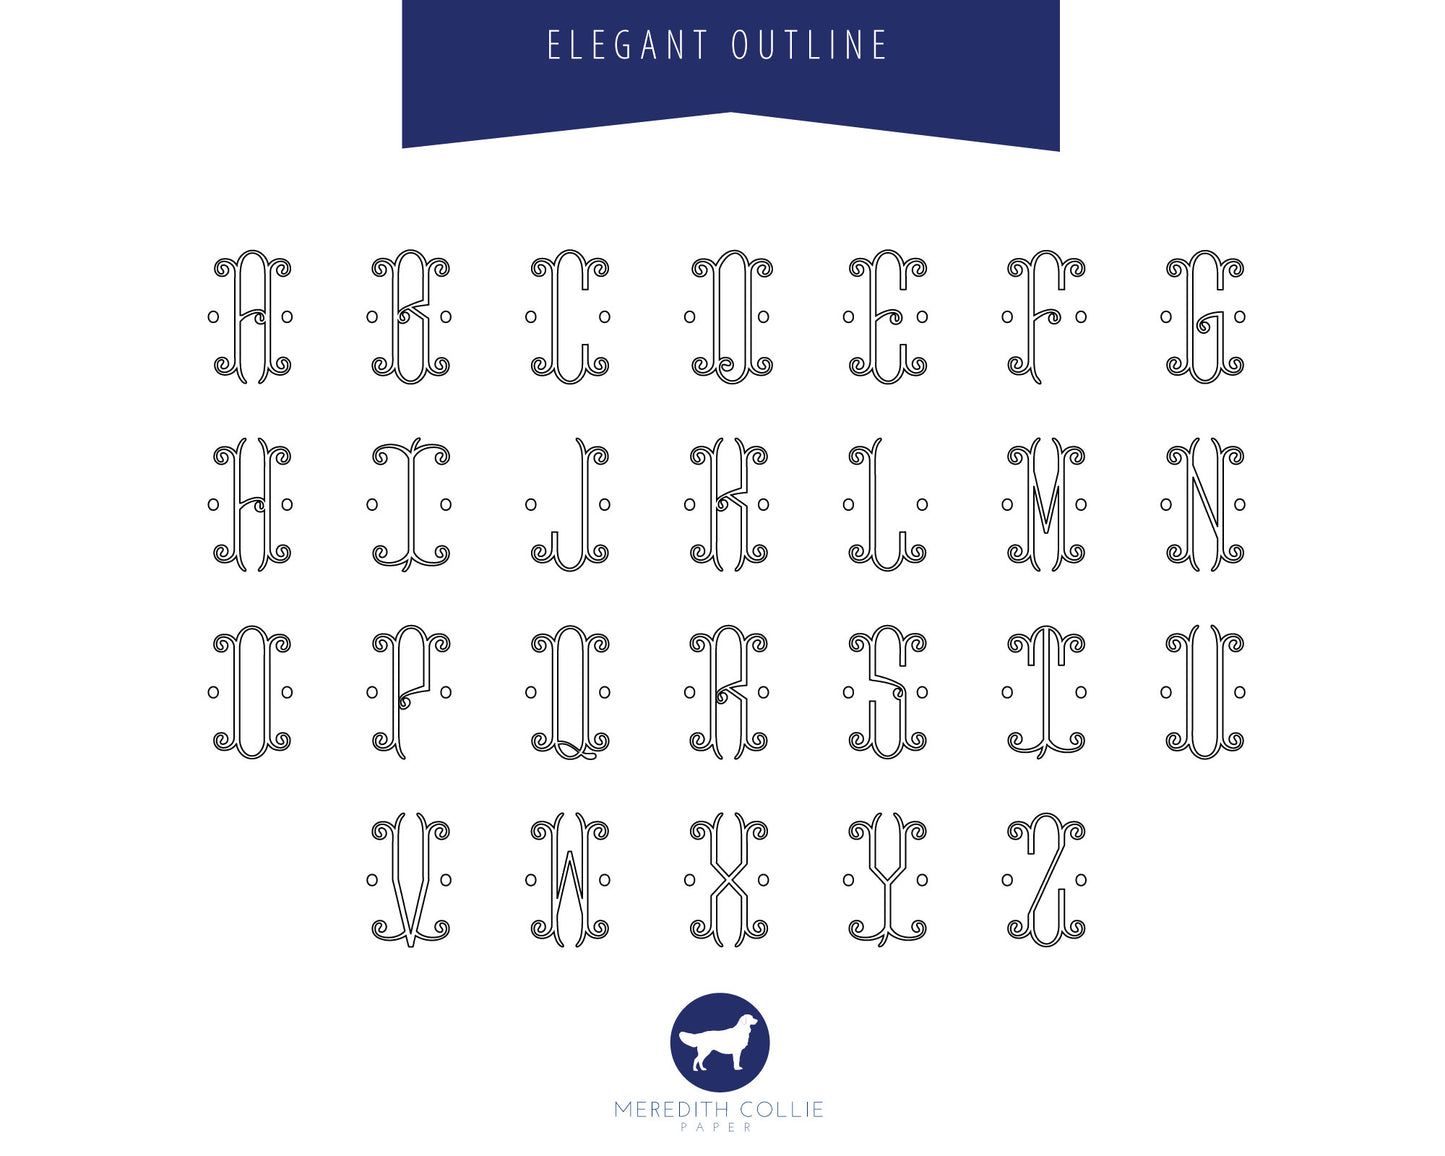 Elegant Outline Single Initial Monogram Stationery